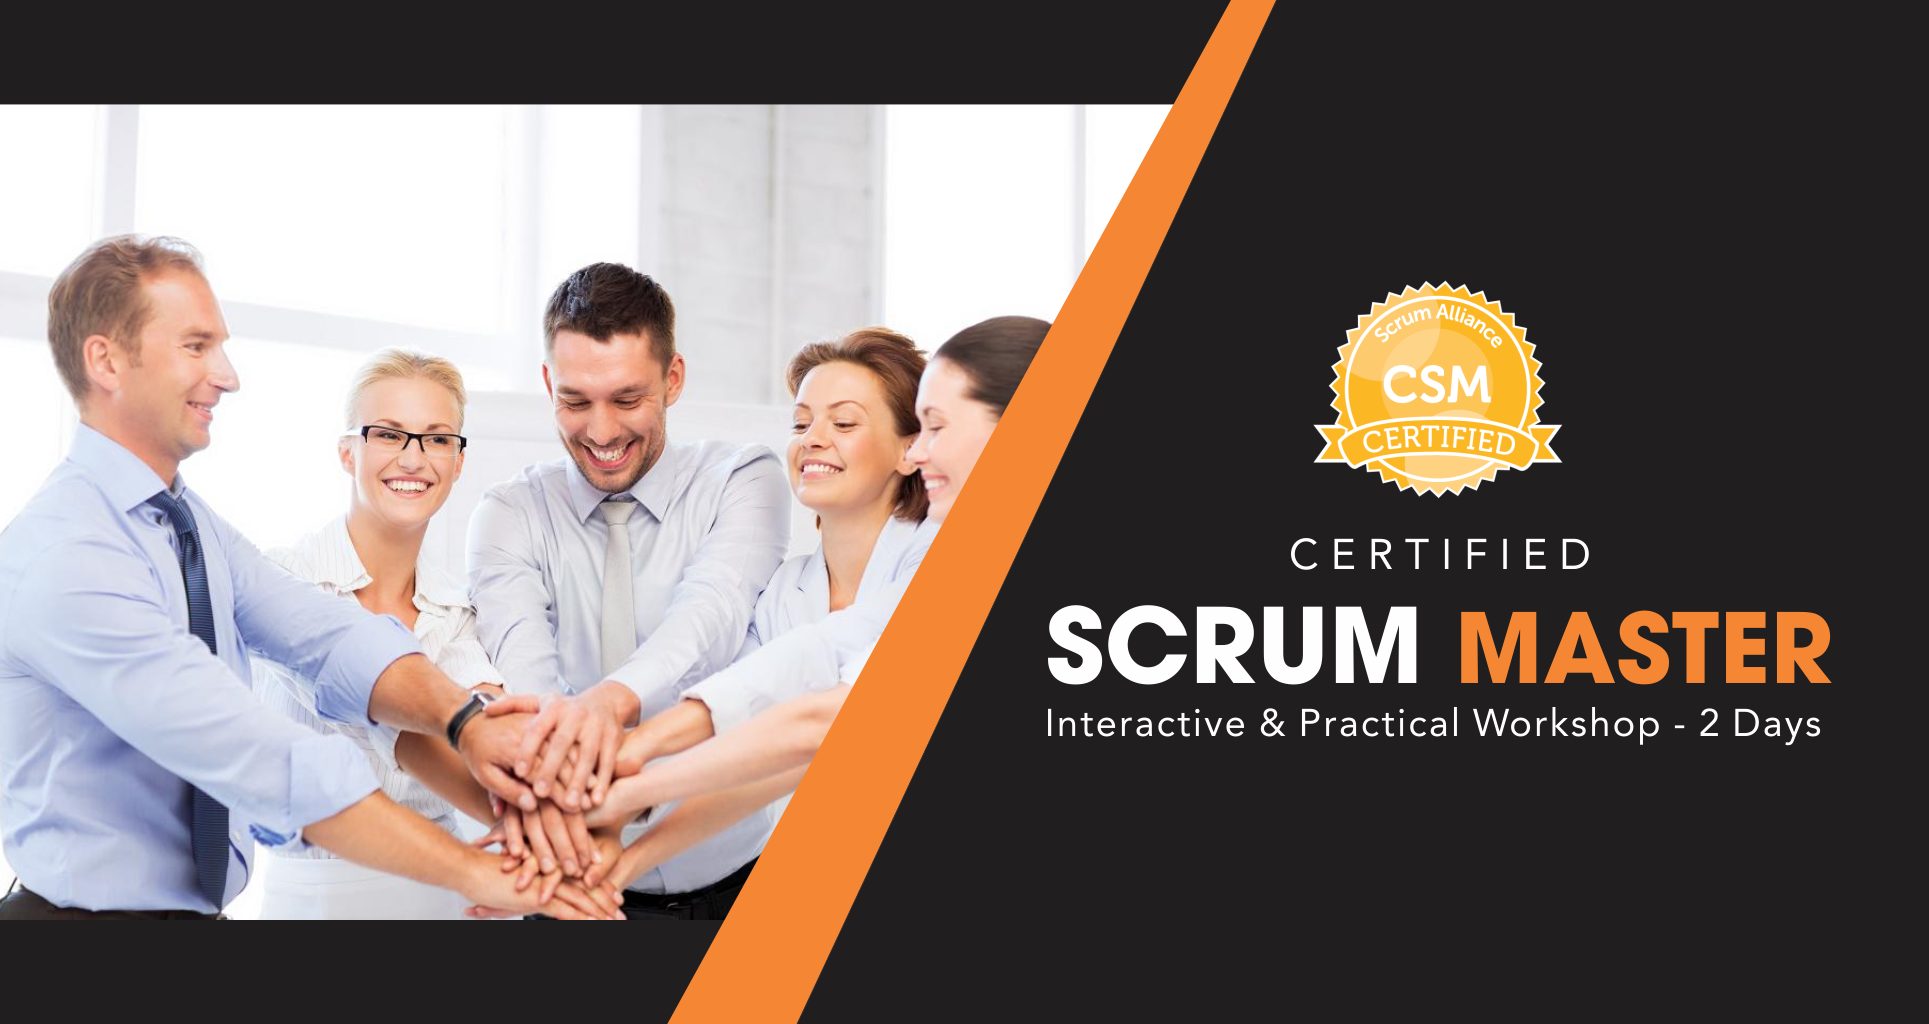 CSM (Certified Scrum Master) certification Training In Miami, FL